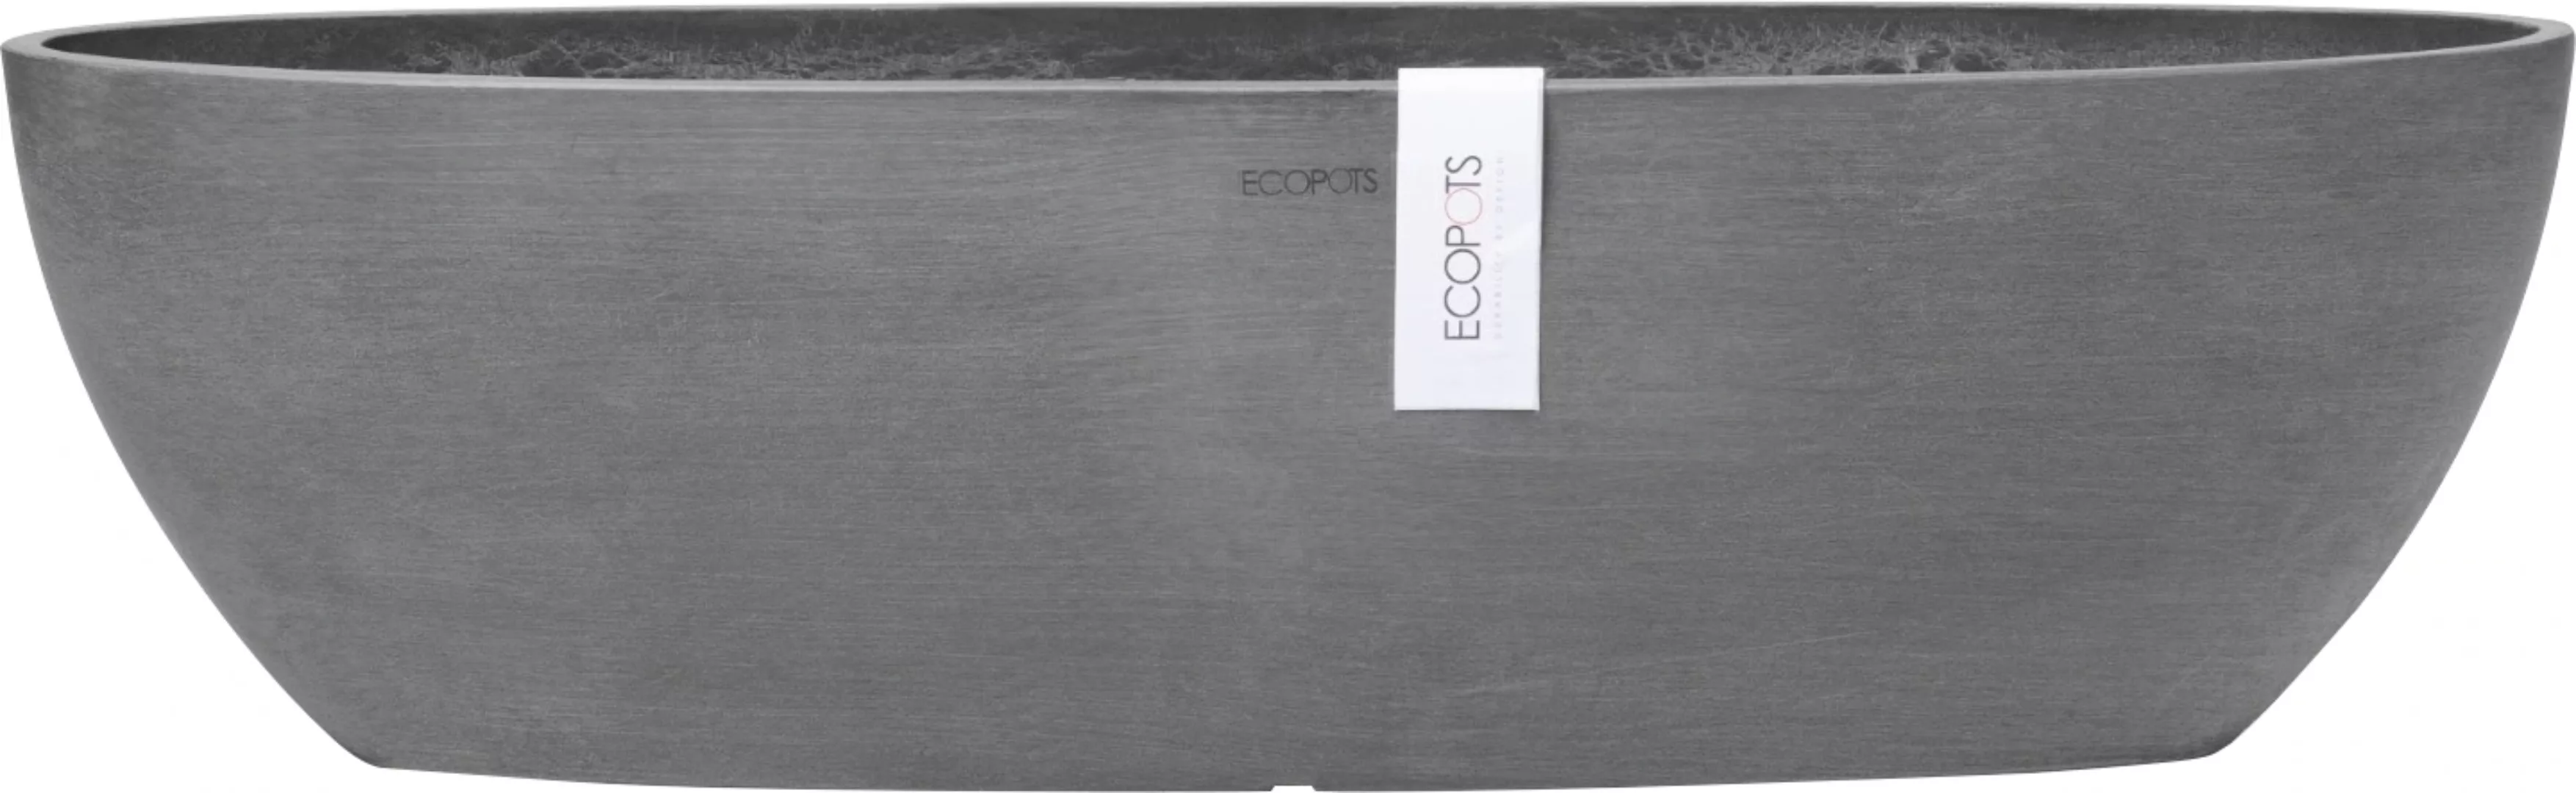 Ecopots Pflanzschale Sofia Lang Grau 56 cm x 14 cm x 16 cm günstig online kaufen